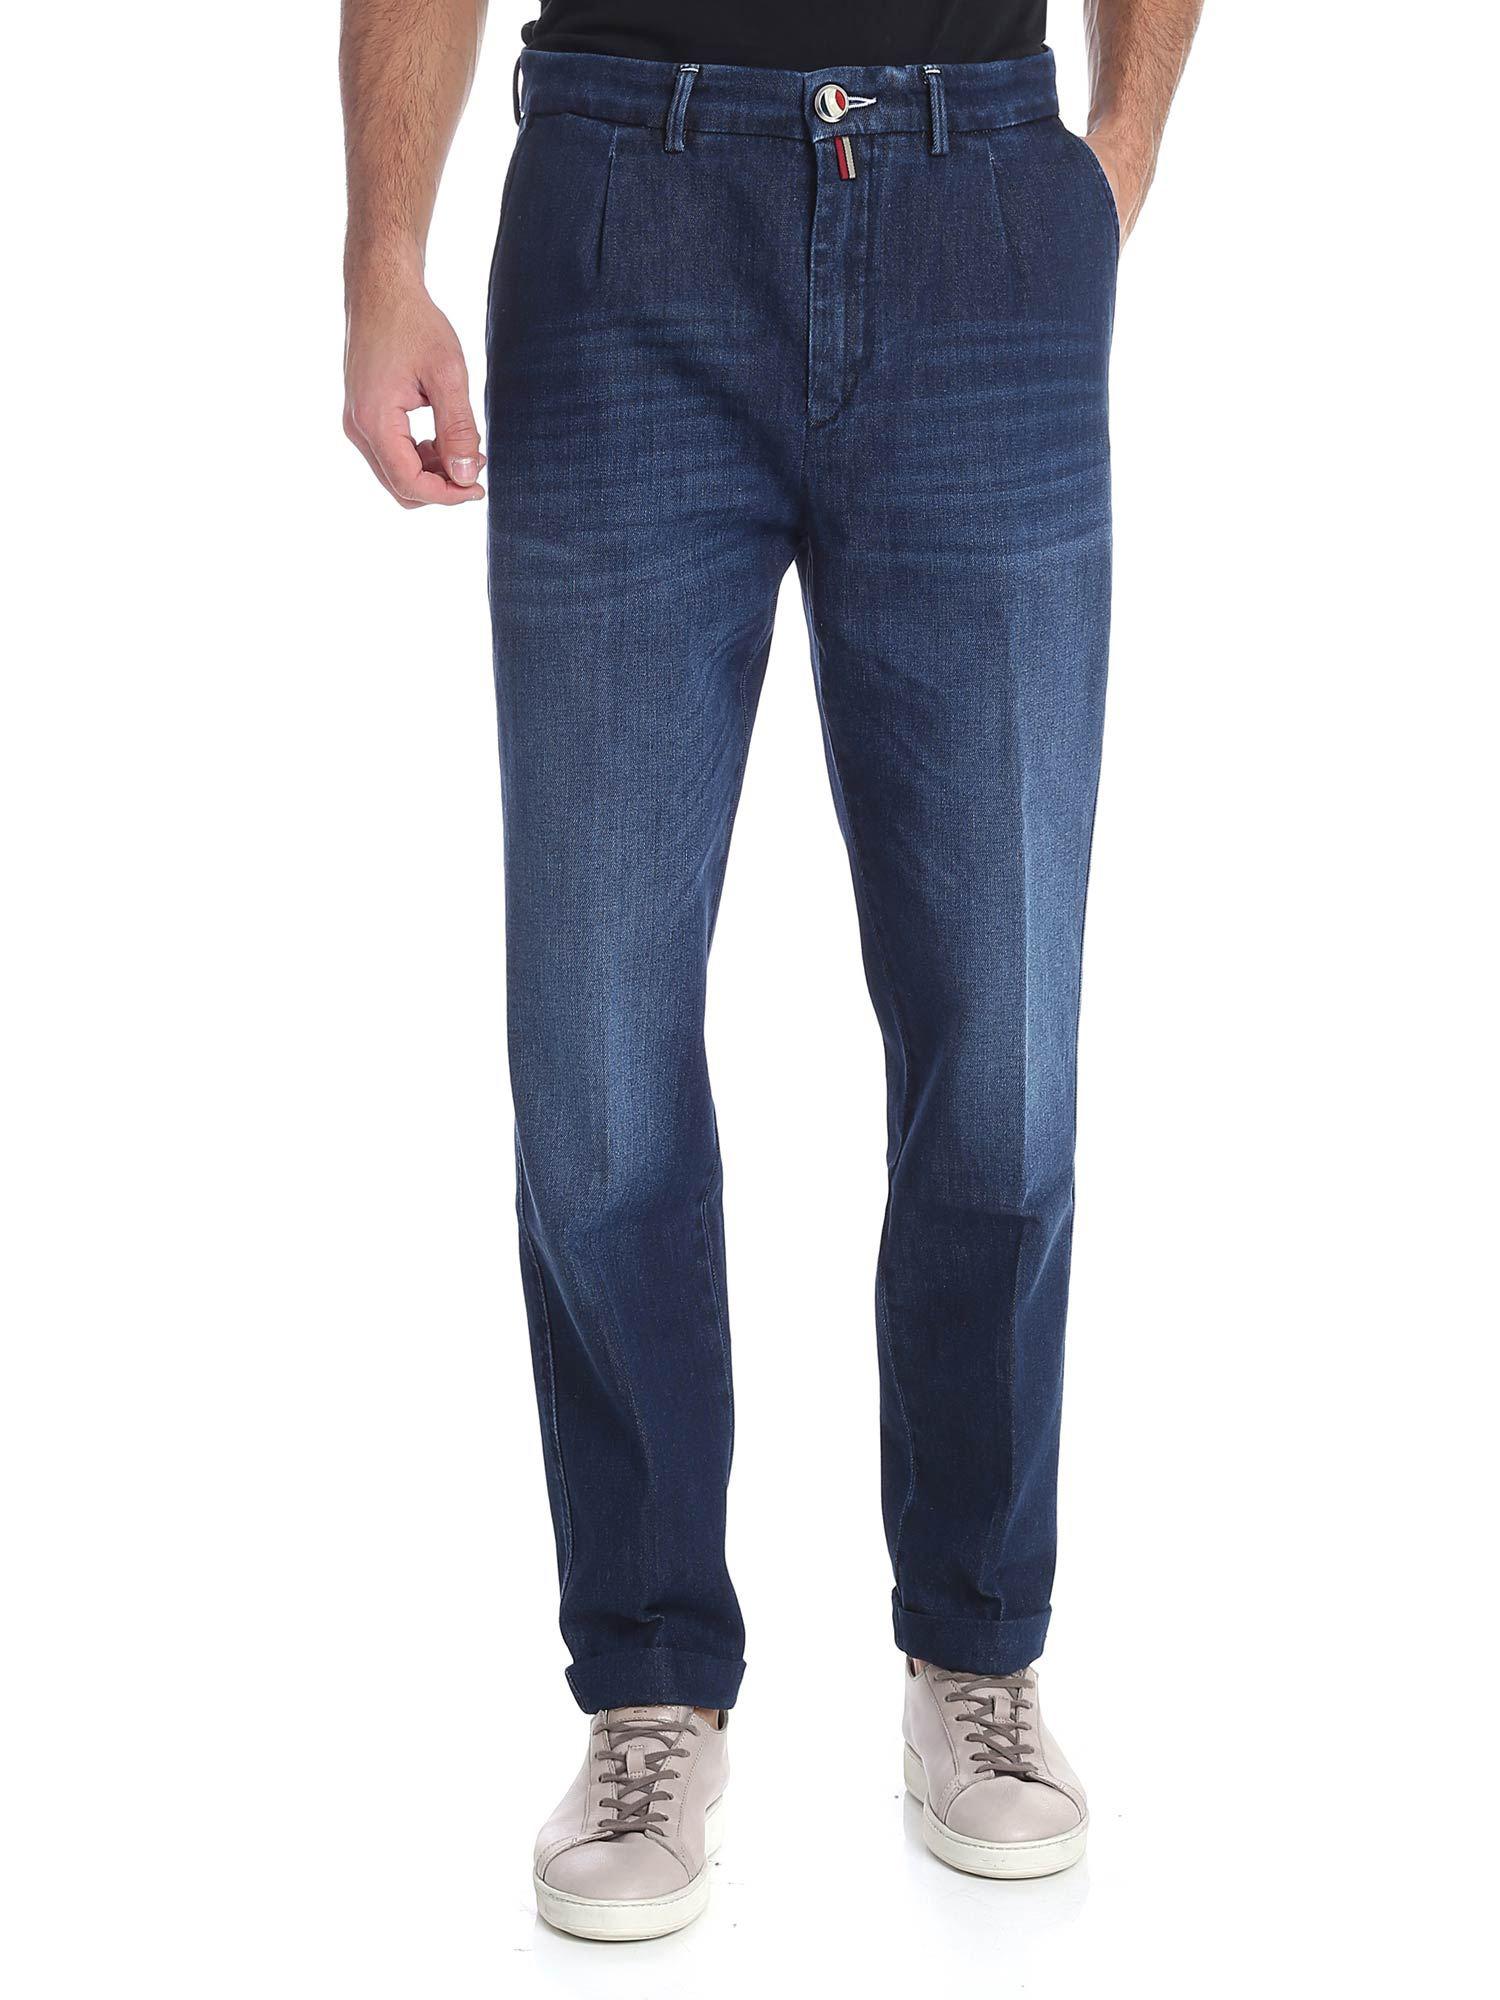 Jacob Cohen Denim Blue Jeans With Slash Pockets for Men - Lyst